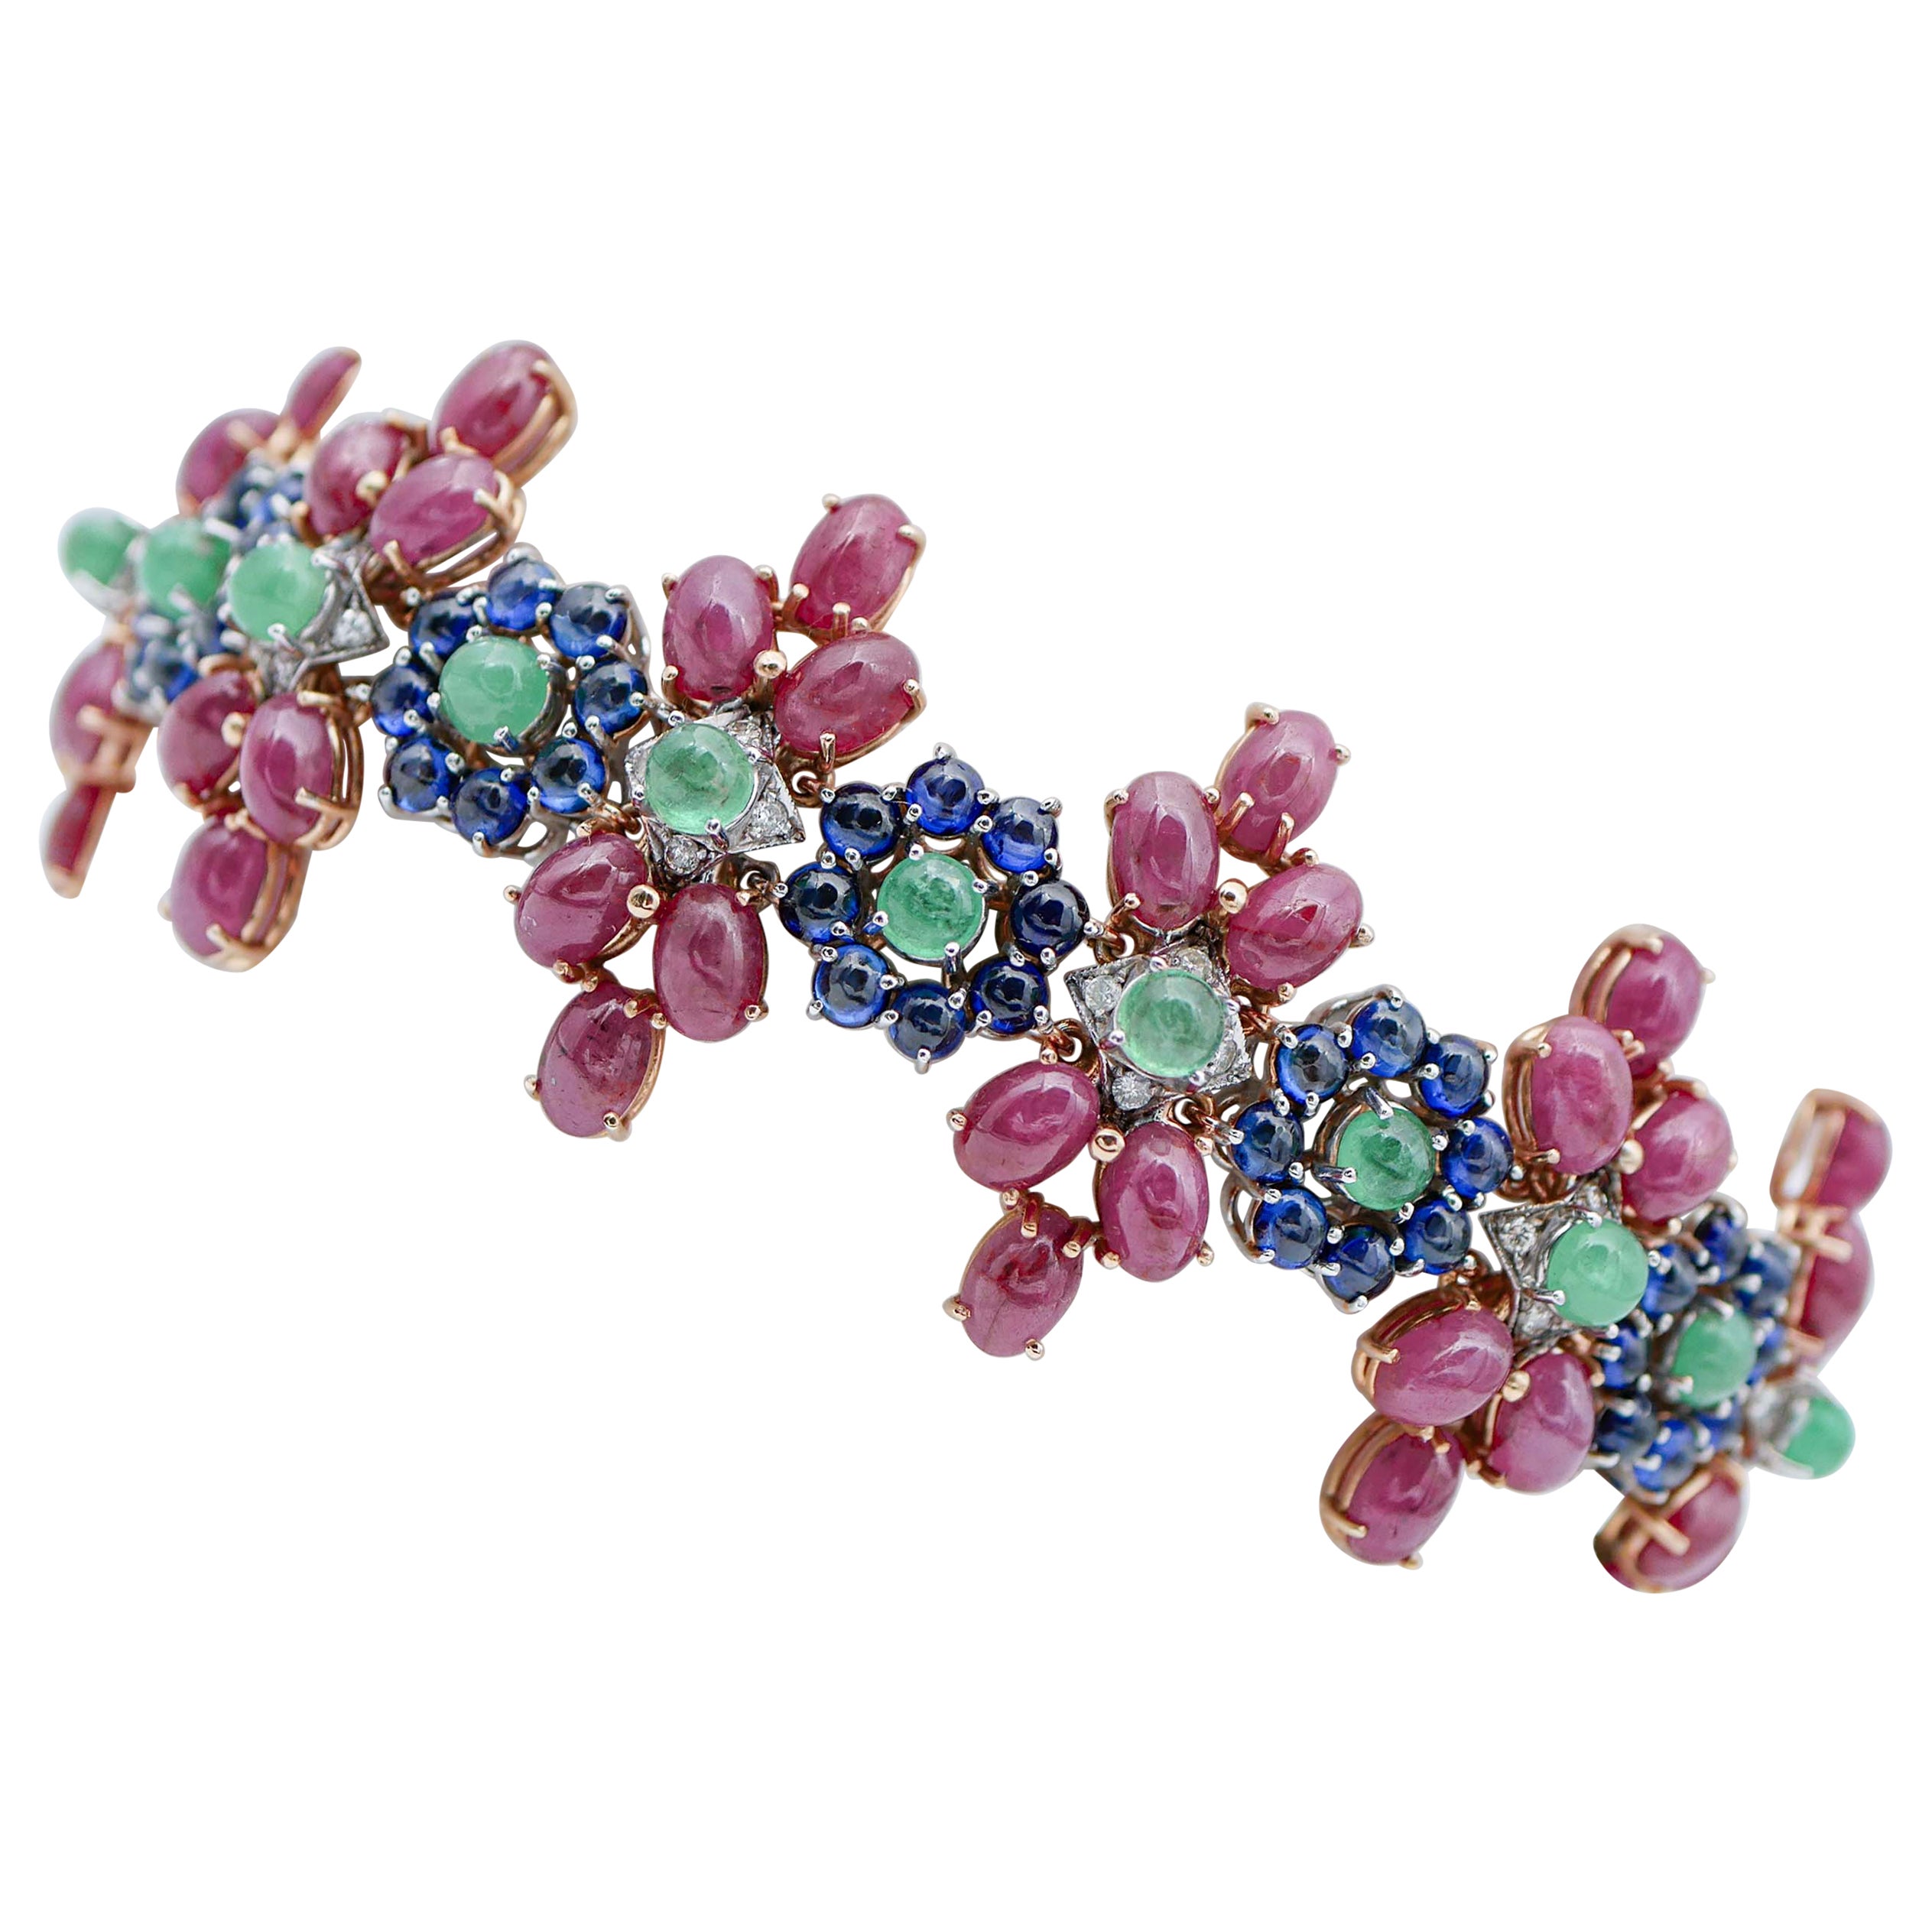 Rubies, Emeralds, Sapphires, 14 Karat White and Rose Gold Bracelet